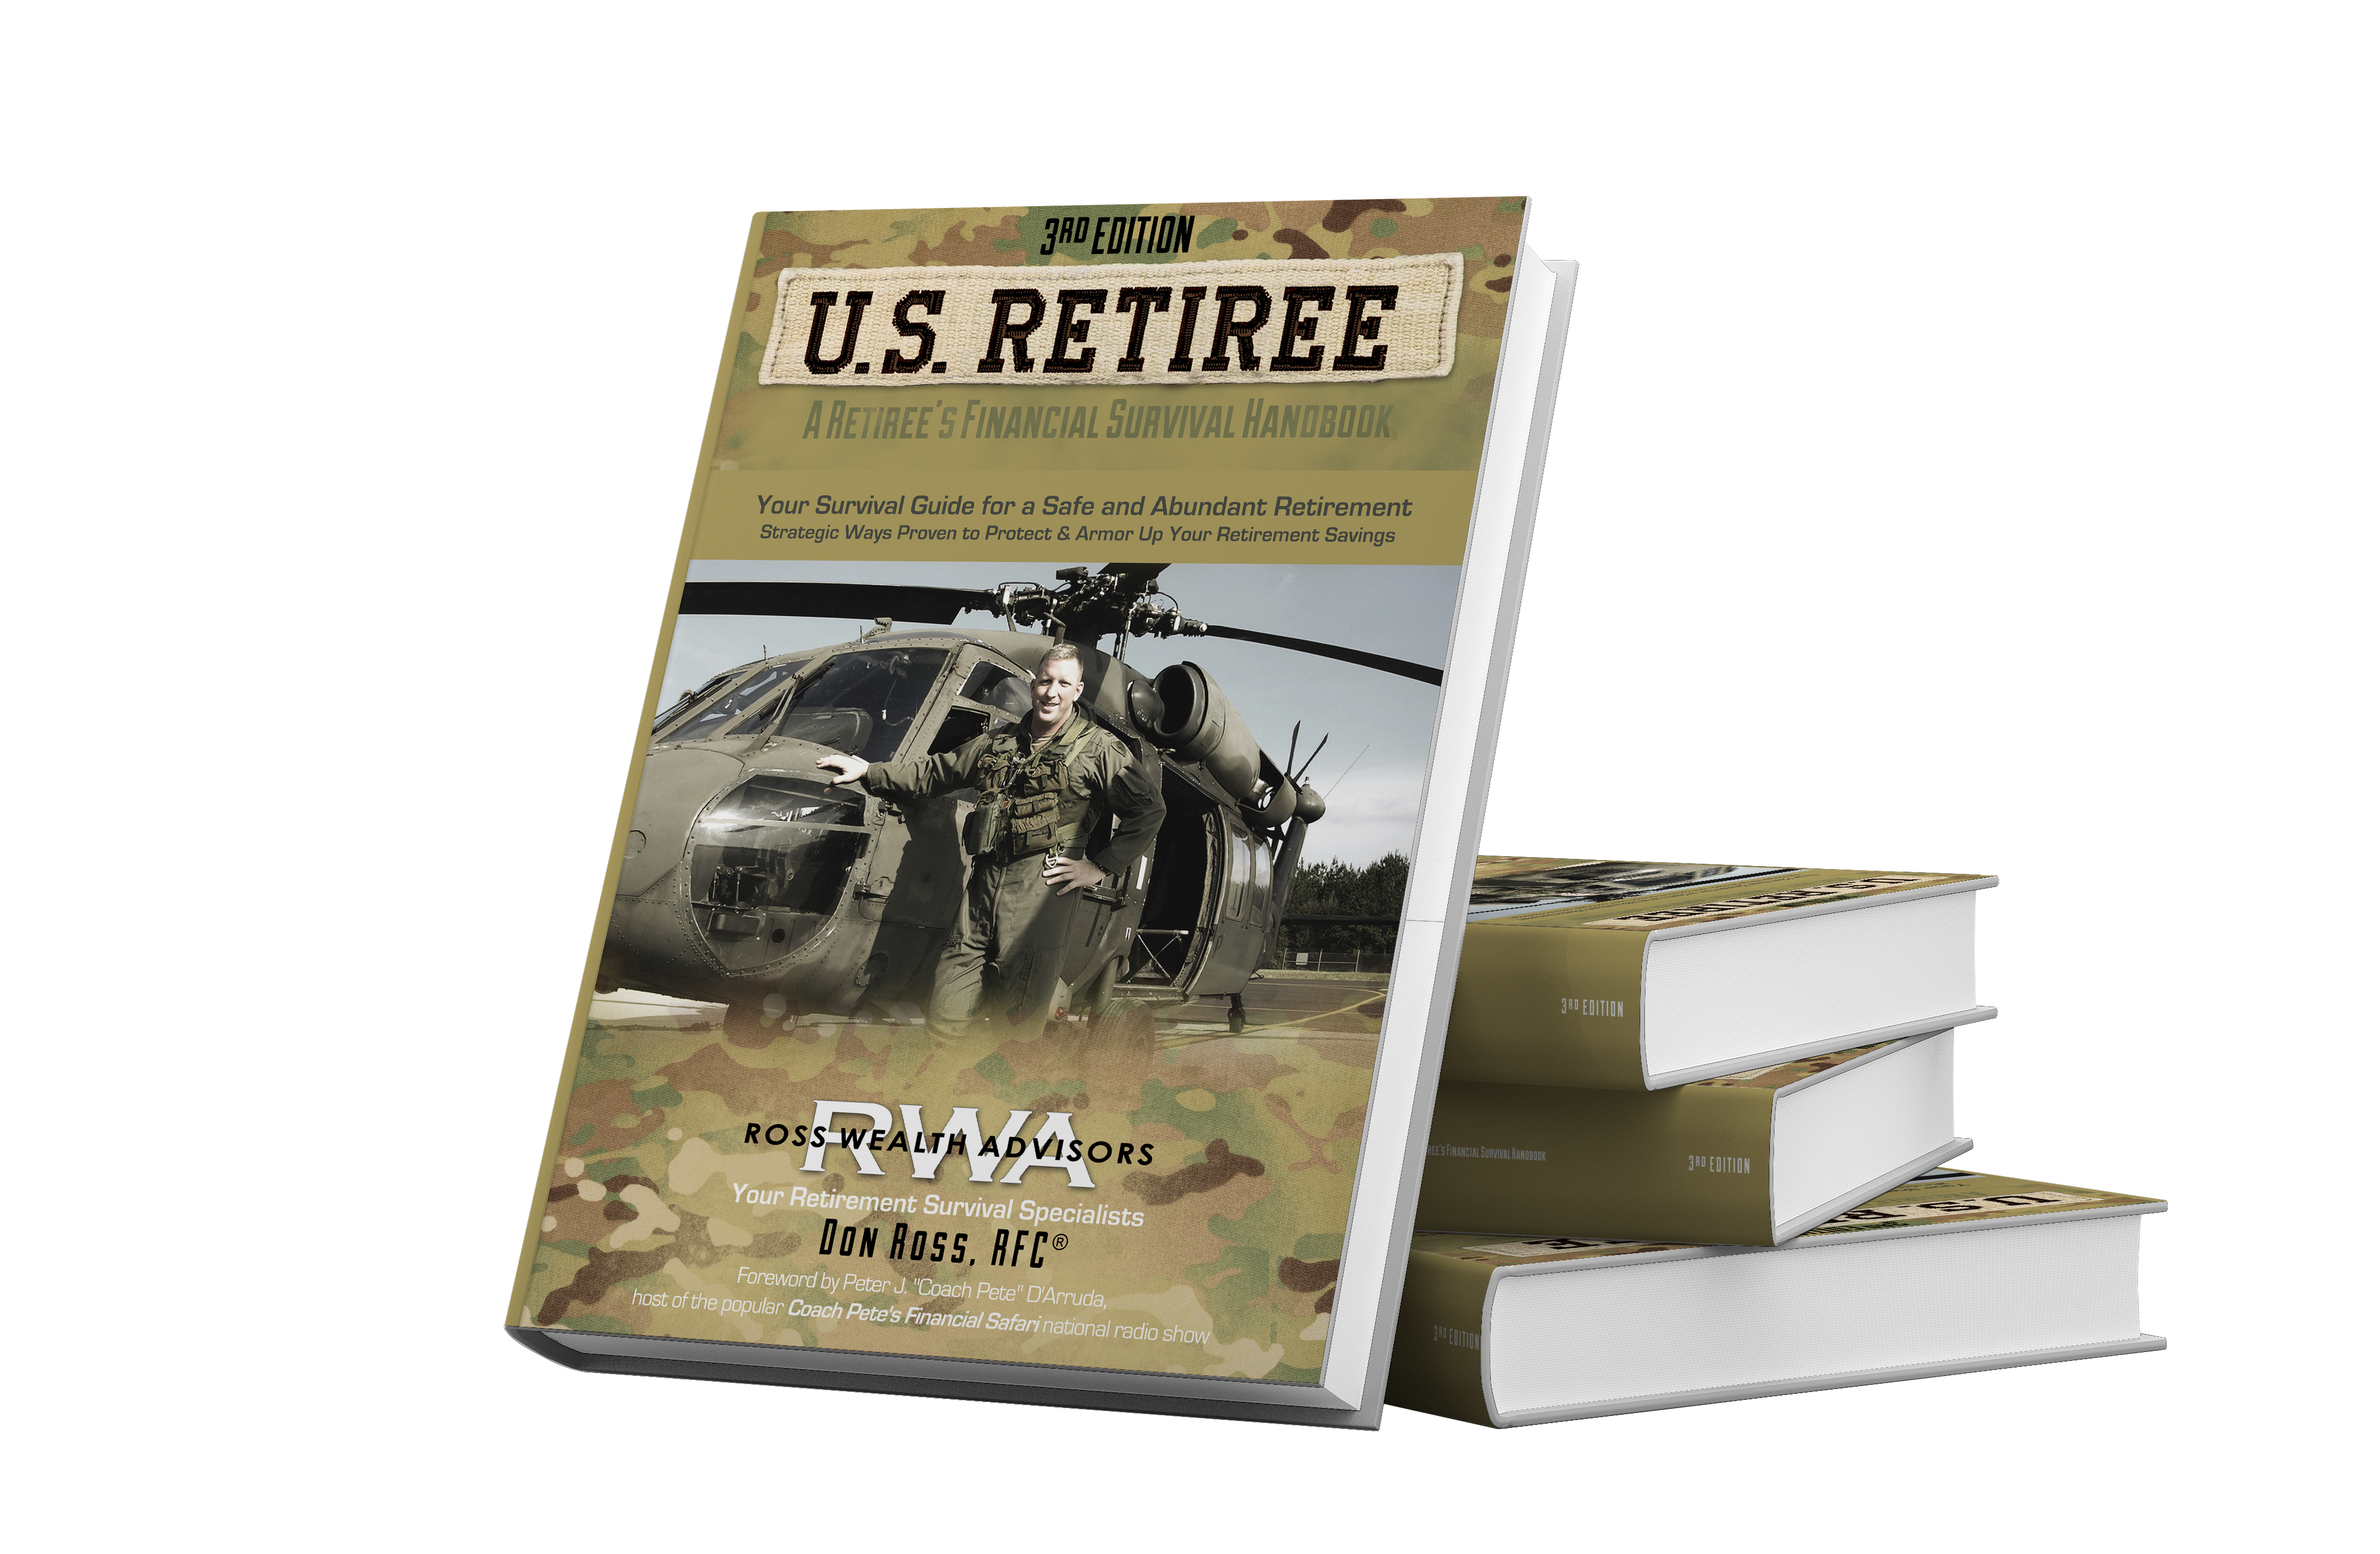 Ross Wealth Advisors U.S. Retiree Books.